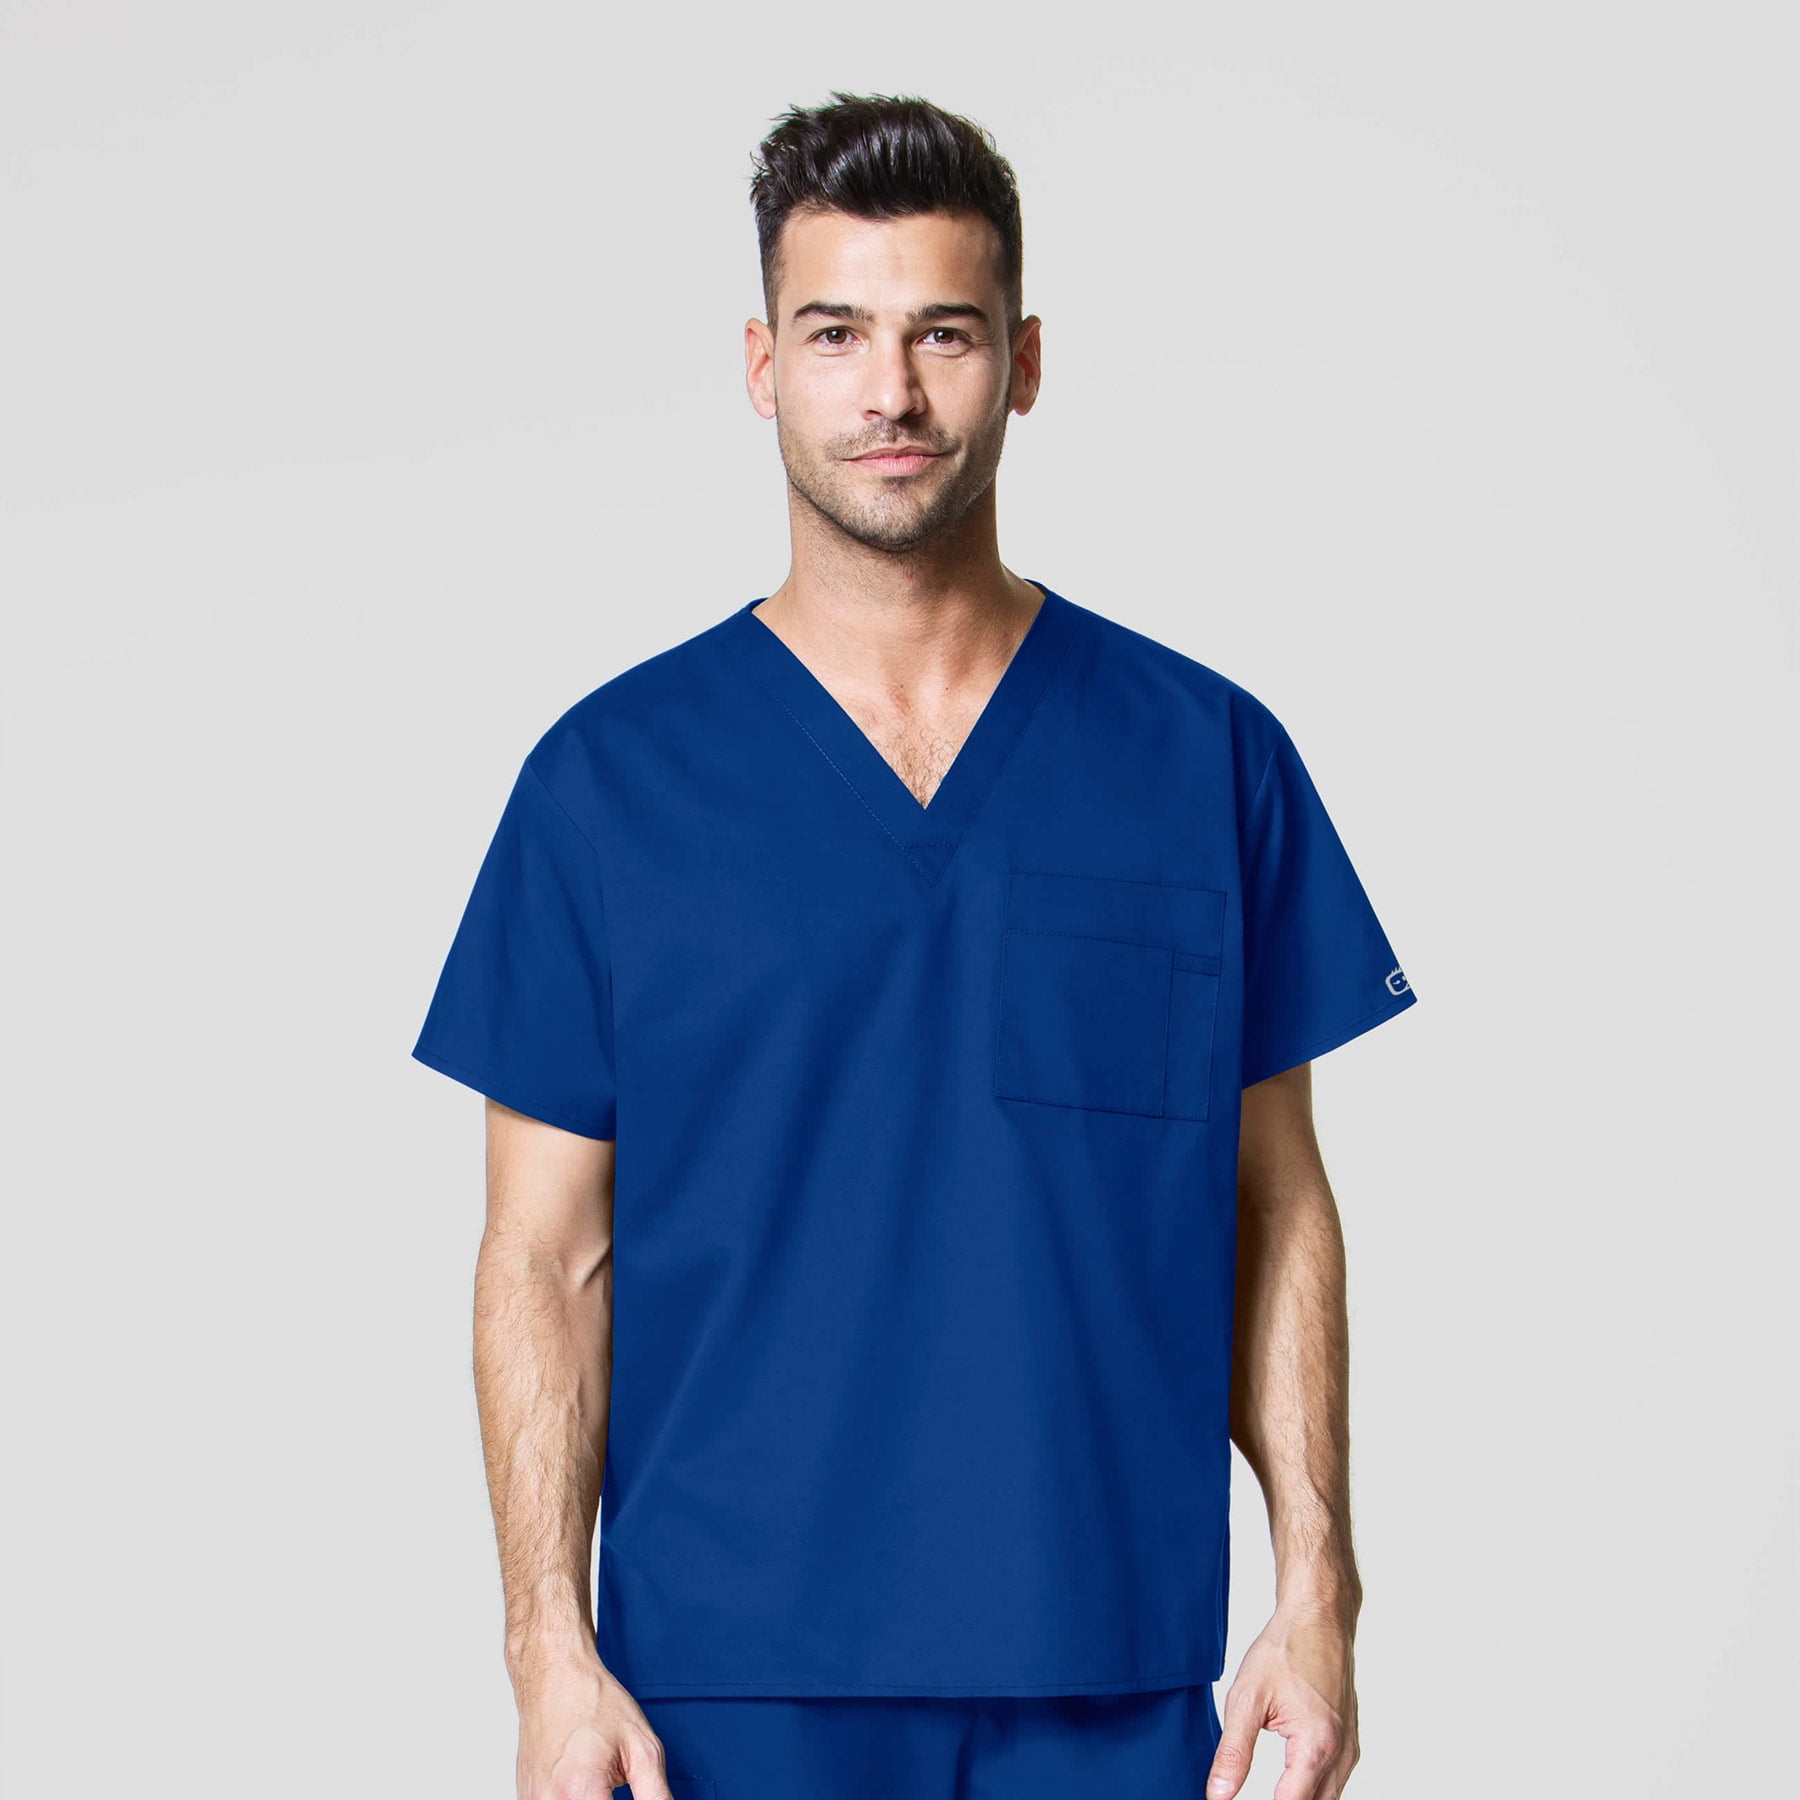 Scrubs медицинская. Рубашка медицинская мужская. Scrub Top. Man Scrubs. Dark Blue Medical Shirt.